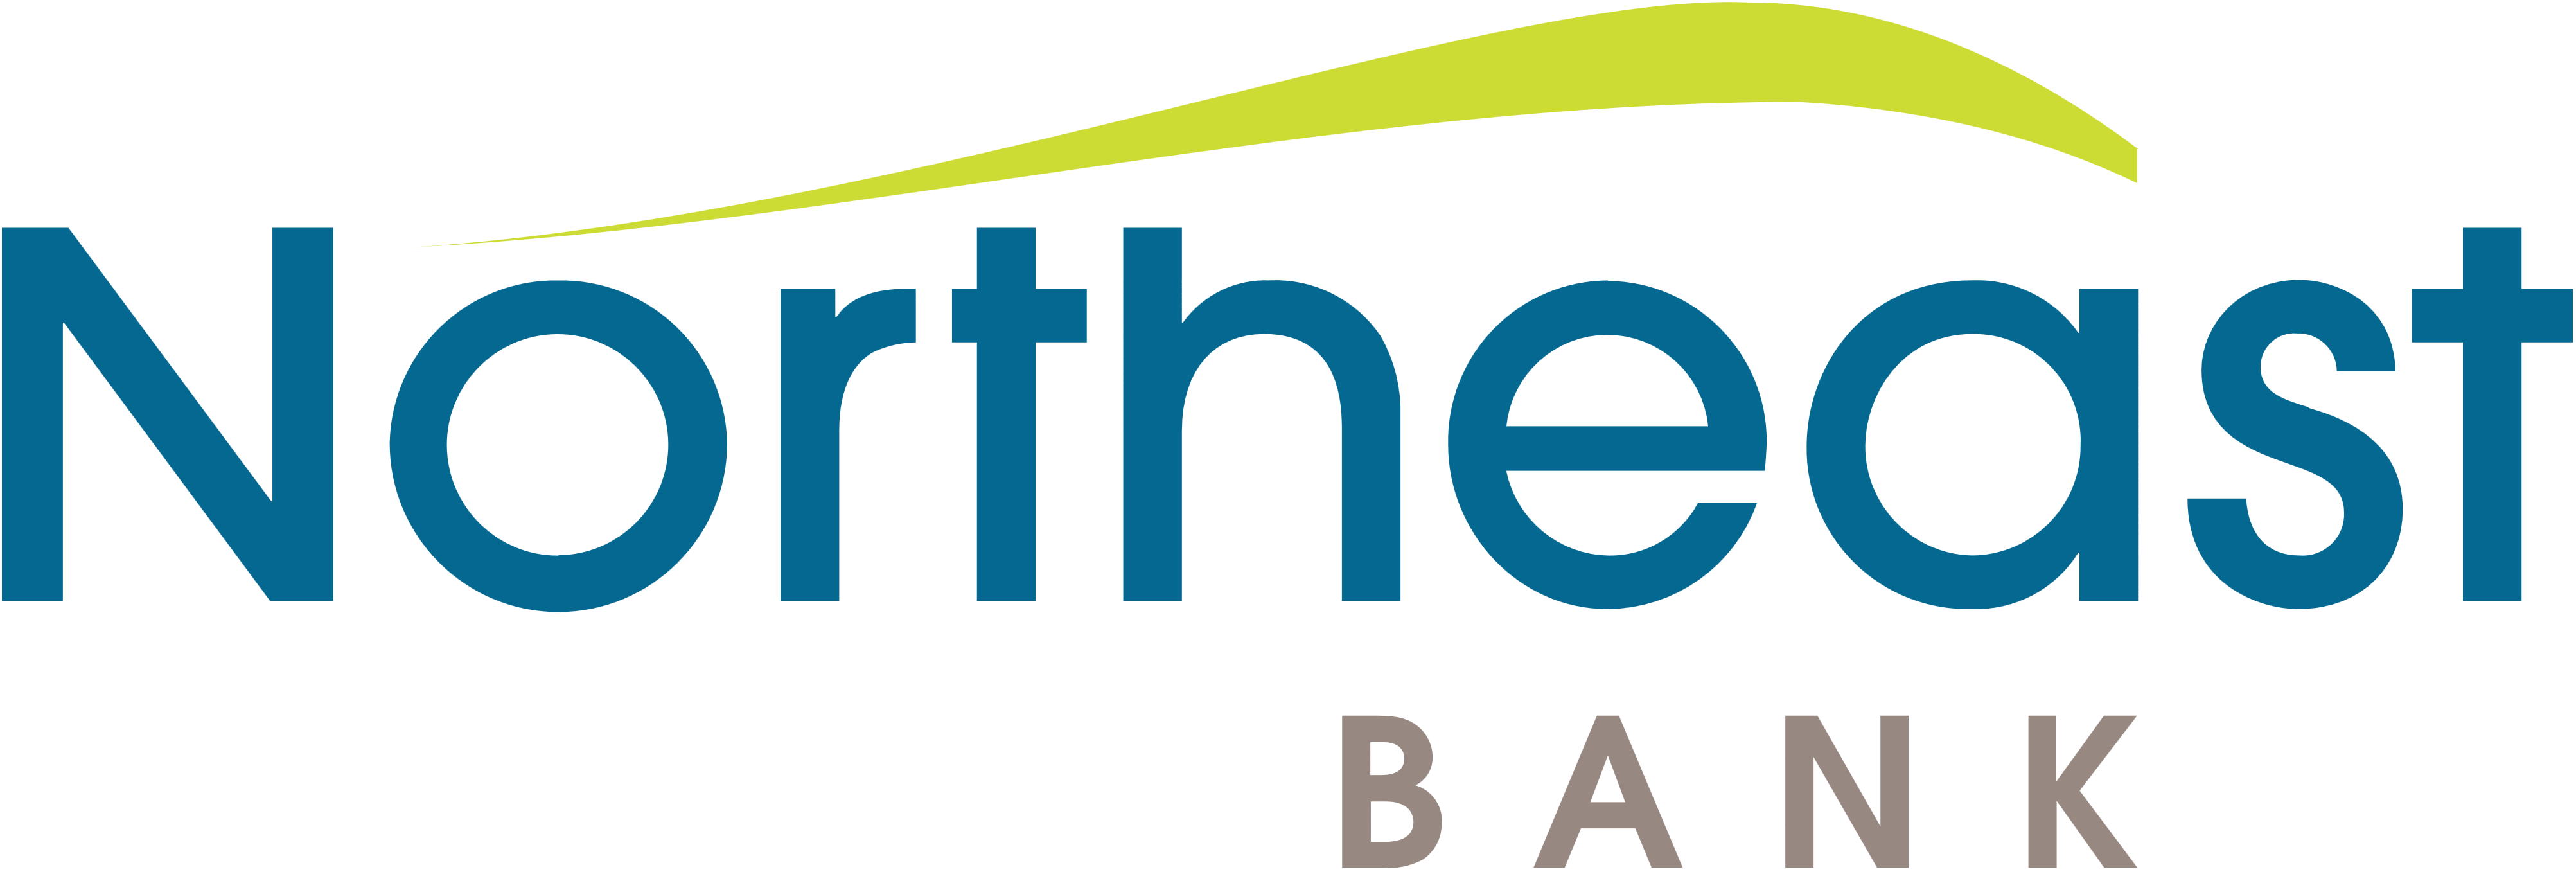 Northeast Bank logo, logotype